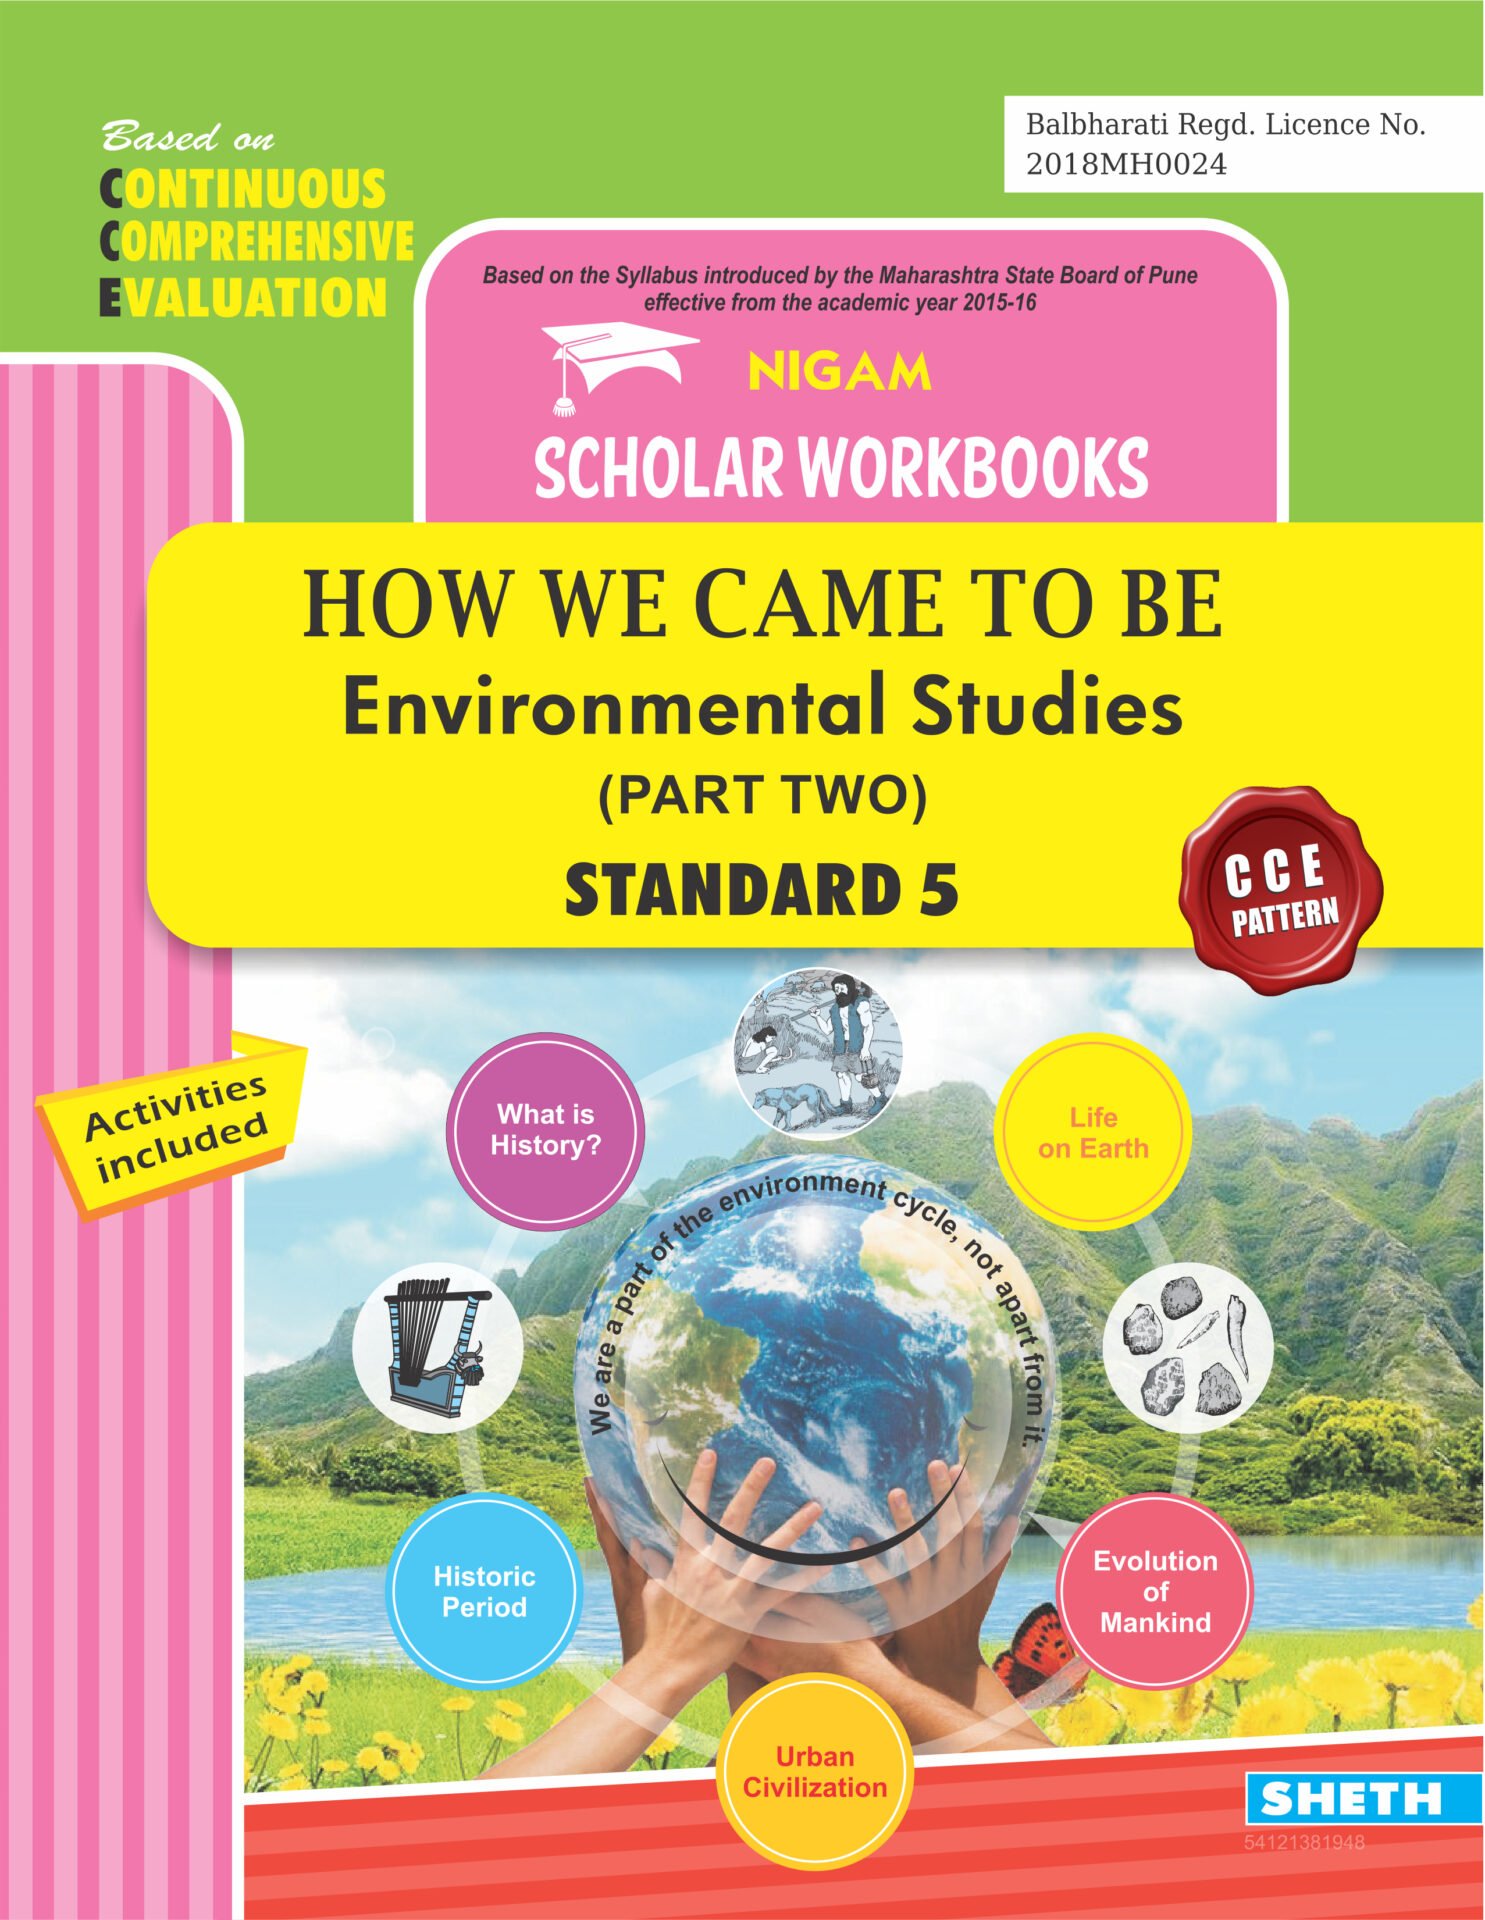 CCE Pattern Nigam Scholar Workbooks Environmental Studies Part 2 Standard 5 1